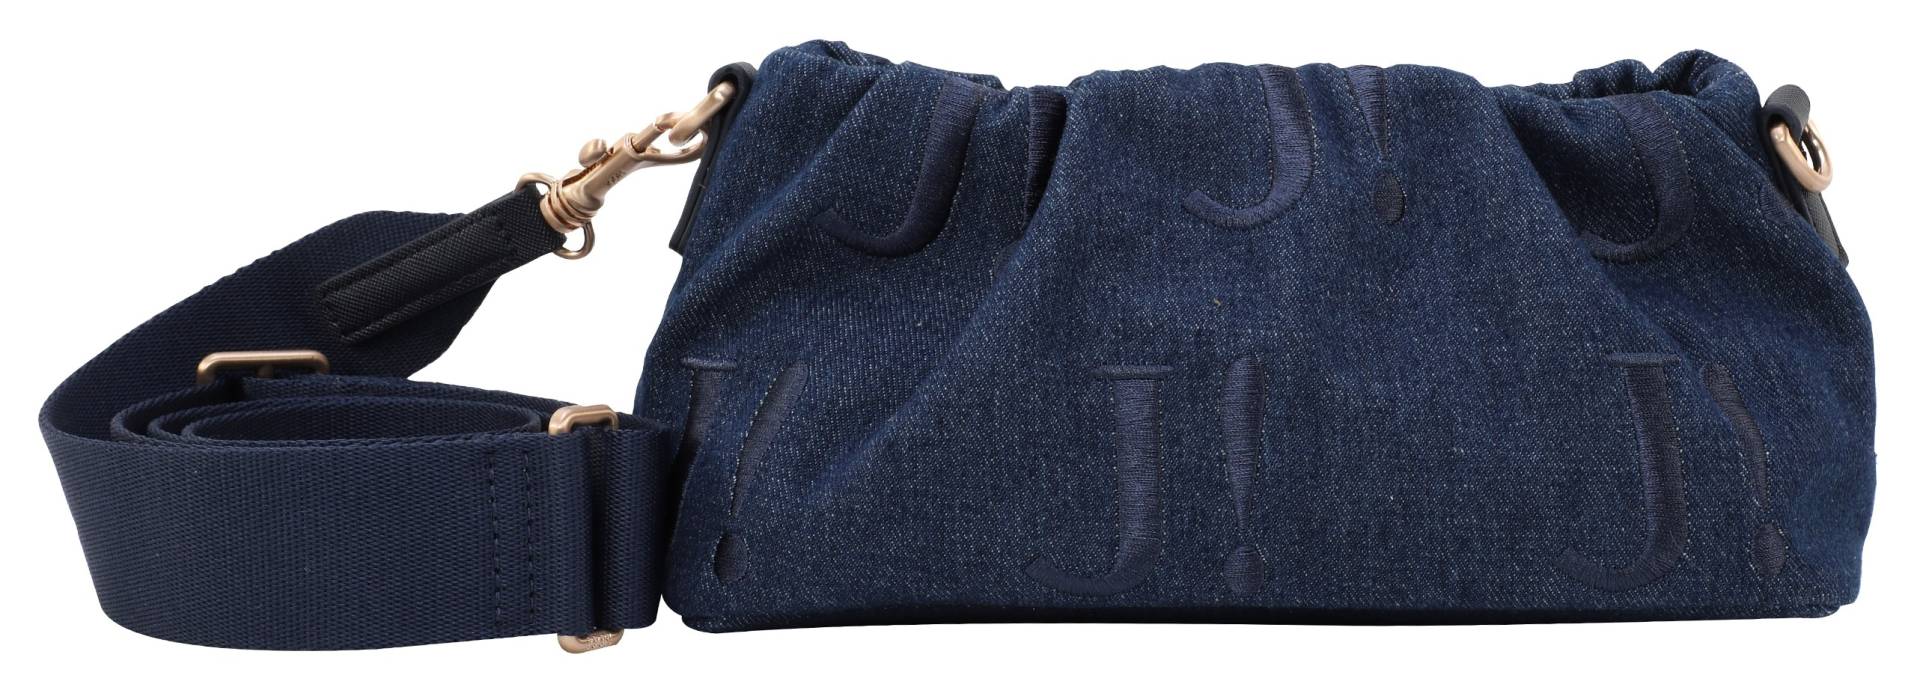 Joop Jeans Umhängetasche »brioso indaco marielle shoulderbag sho«, in Jeansoptik von Joop Jeans